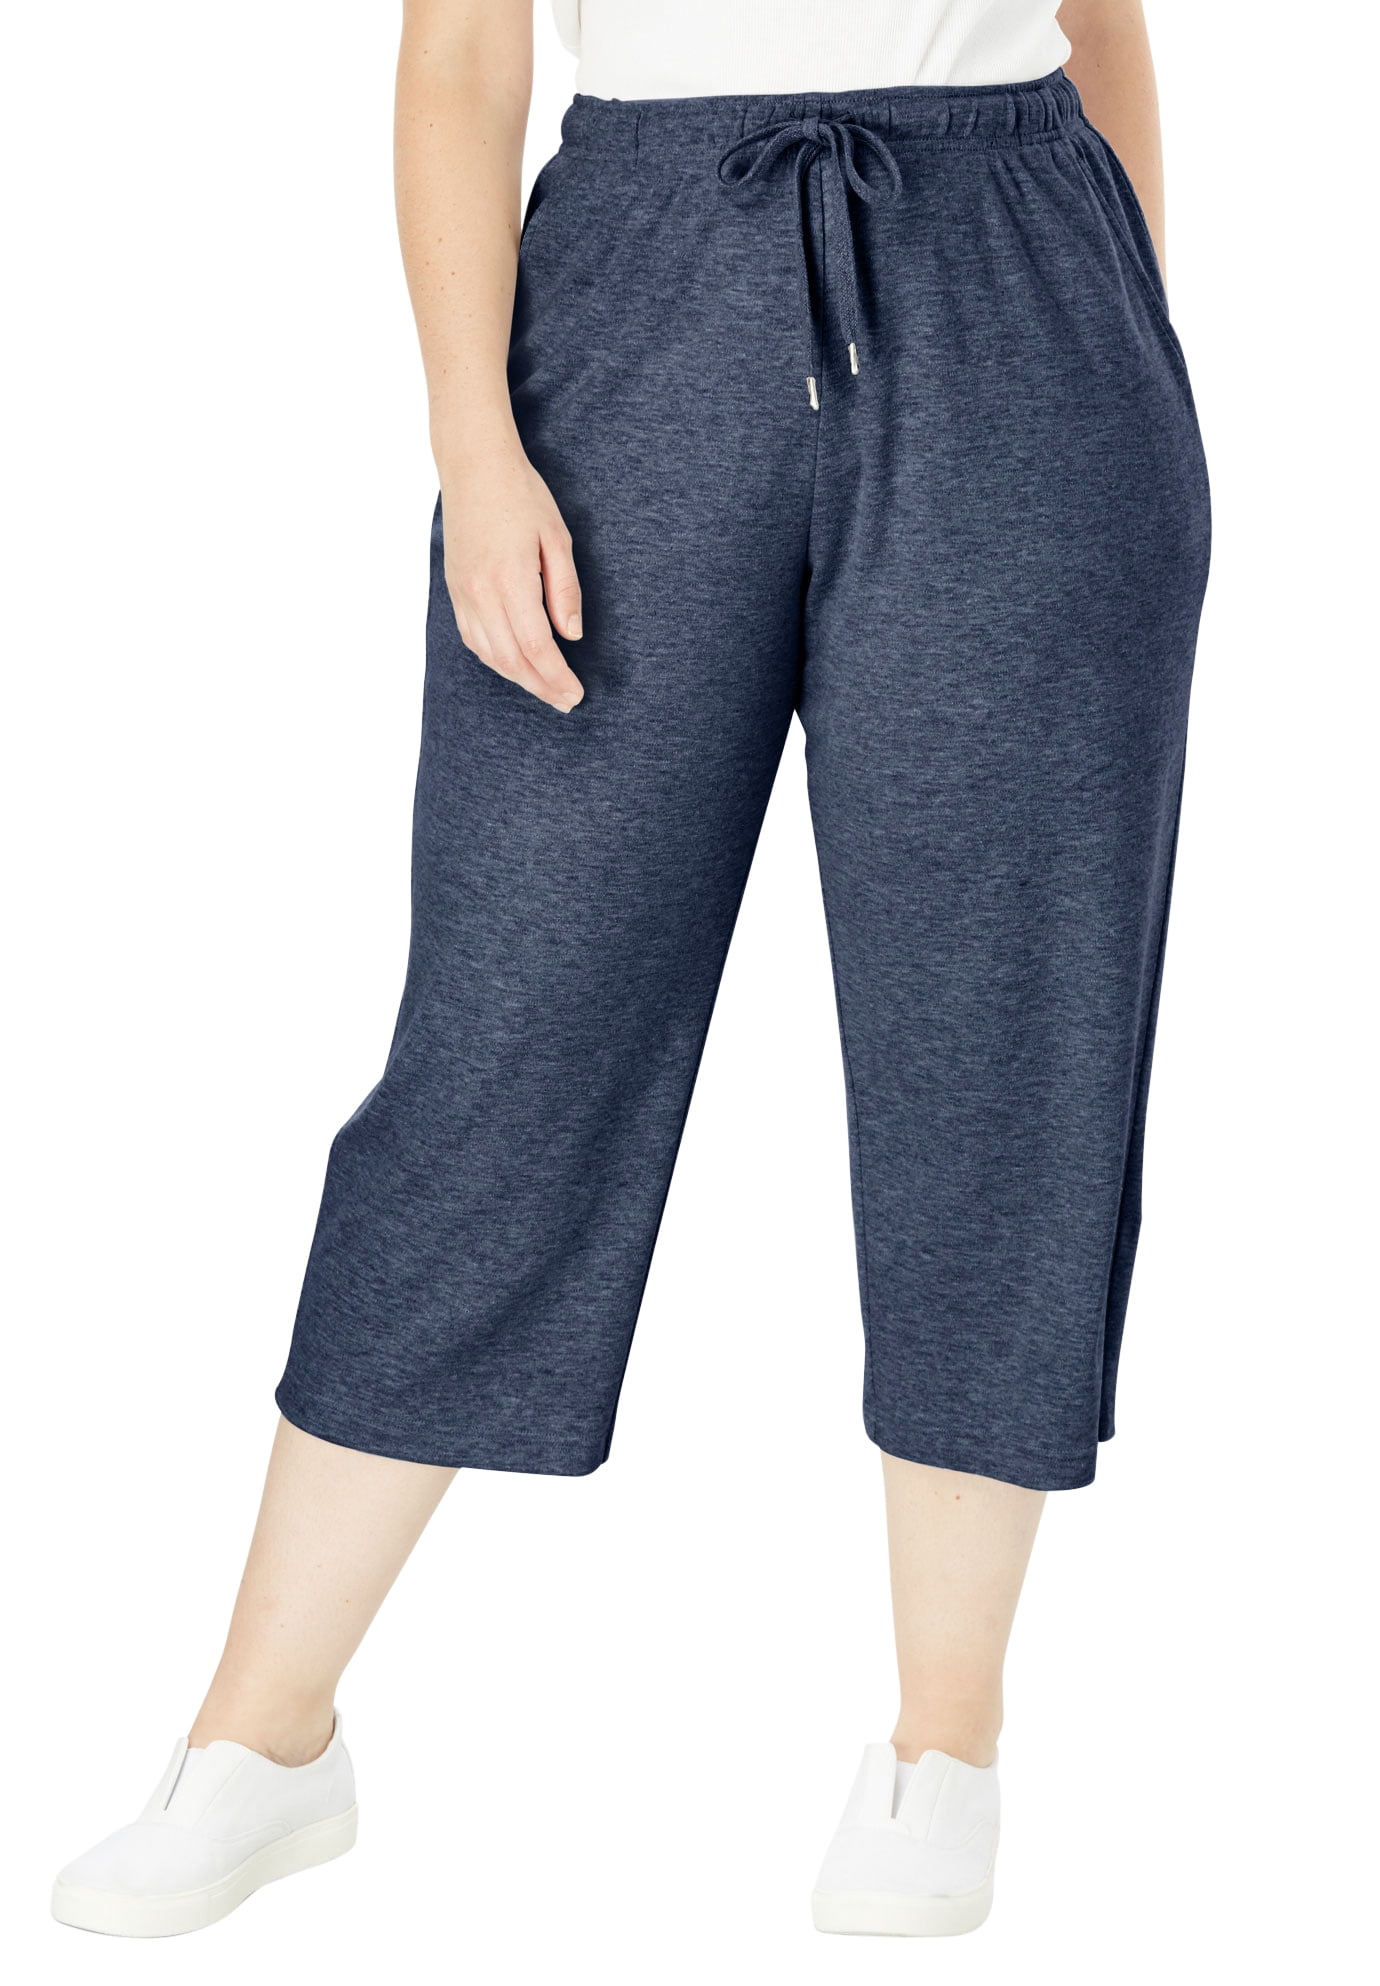 Woman Within Plus Size Petite Sport Knit Capri Pant Pants - Walmart.com